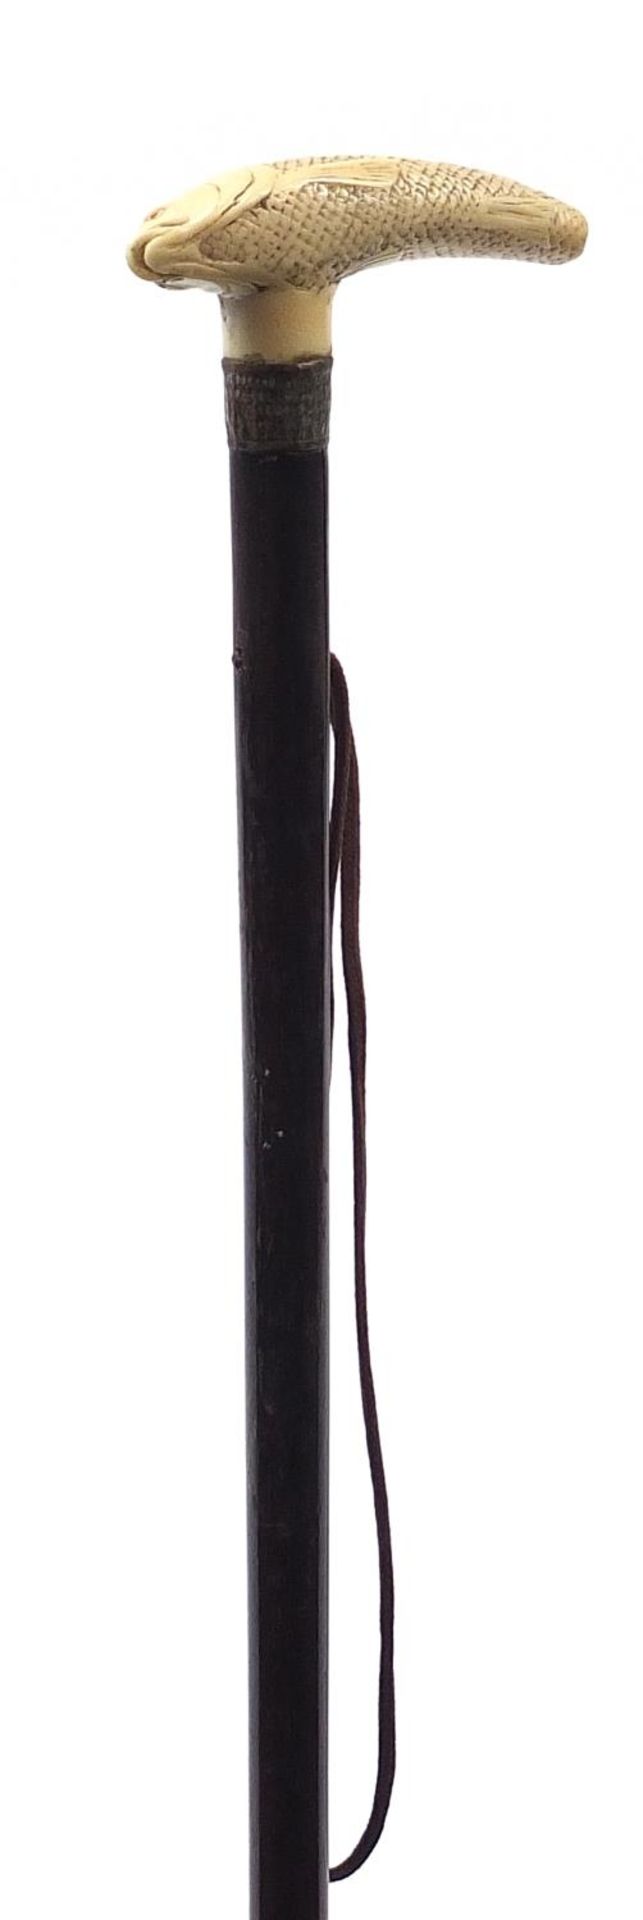 Hardwood walking stick with carved ivory Koi carp handle, 88cm in length - Image 2 of 7